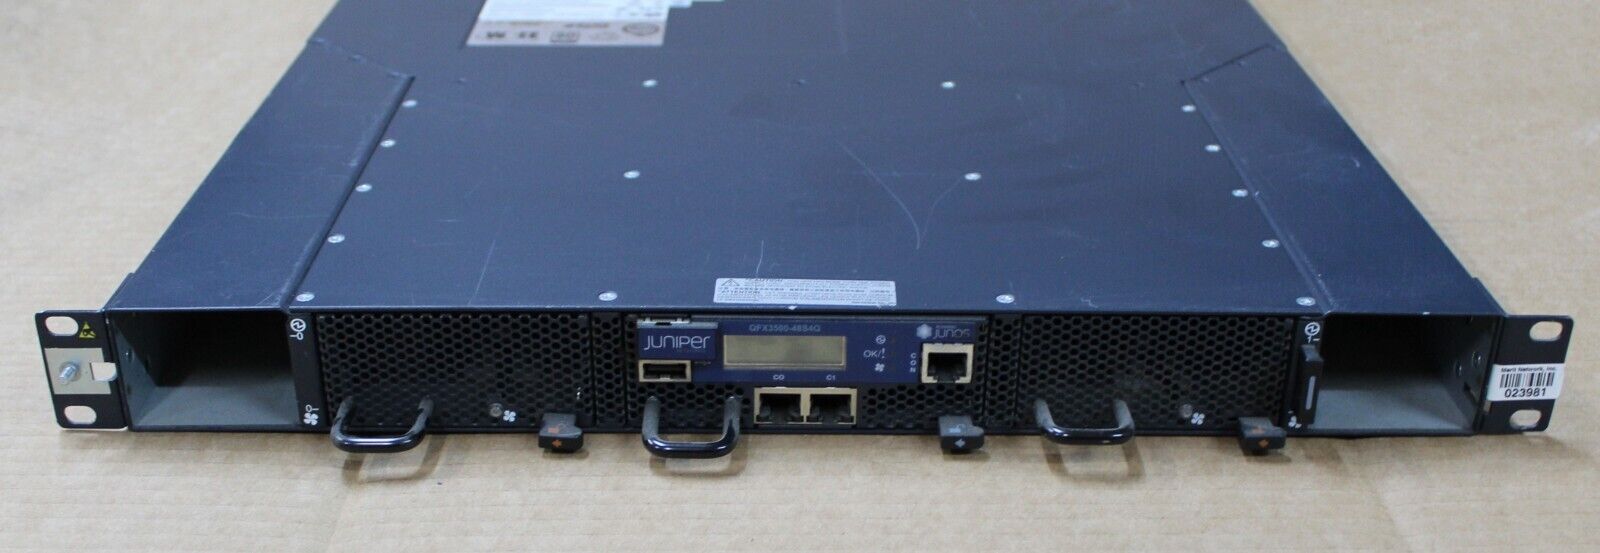 Juniper Networks QFX3500-48S4Q 48-Port 10GbE SFP+ Network Switch